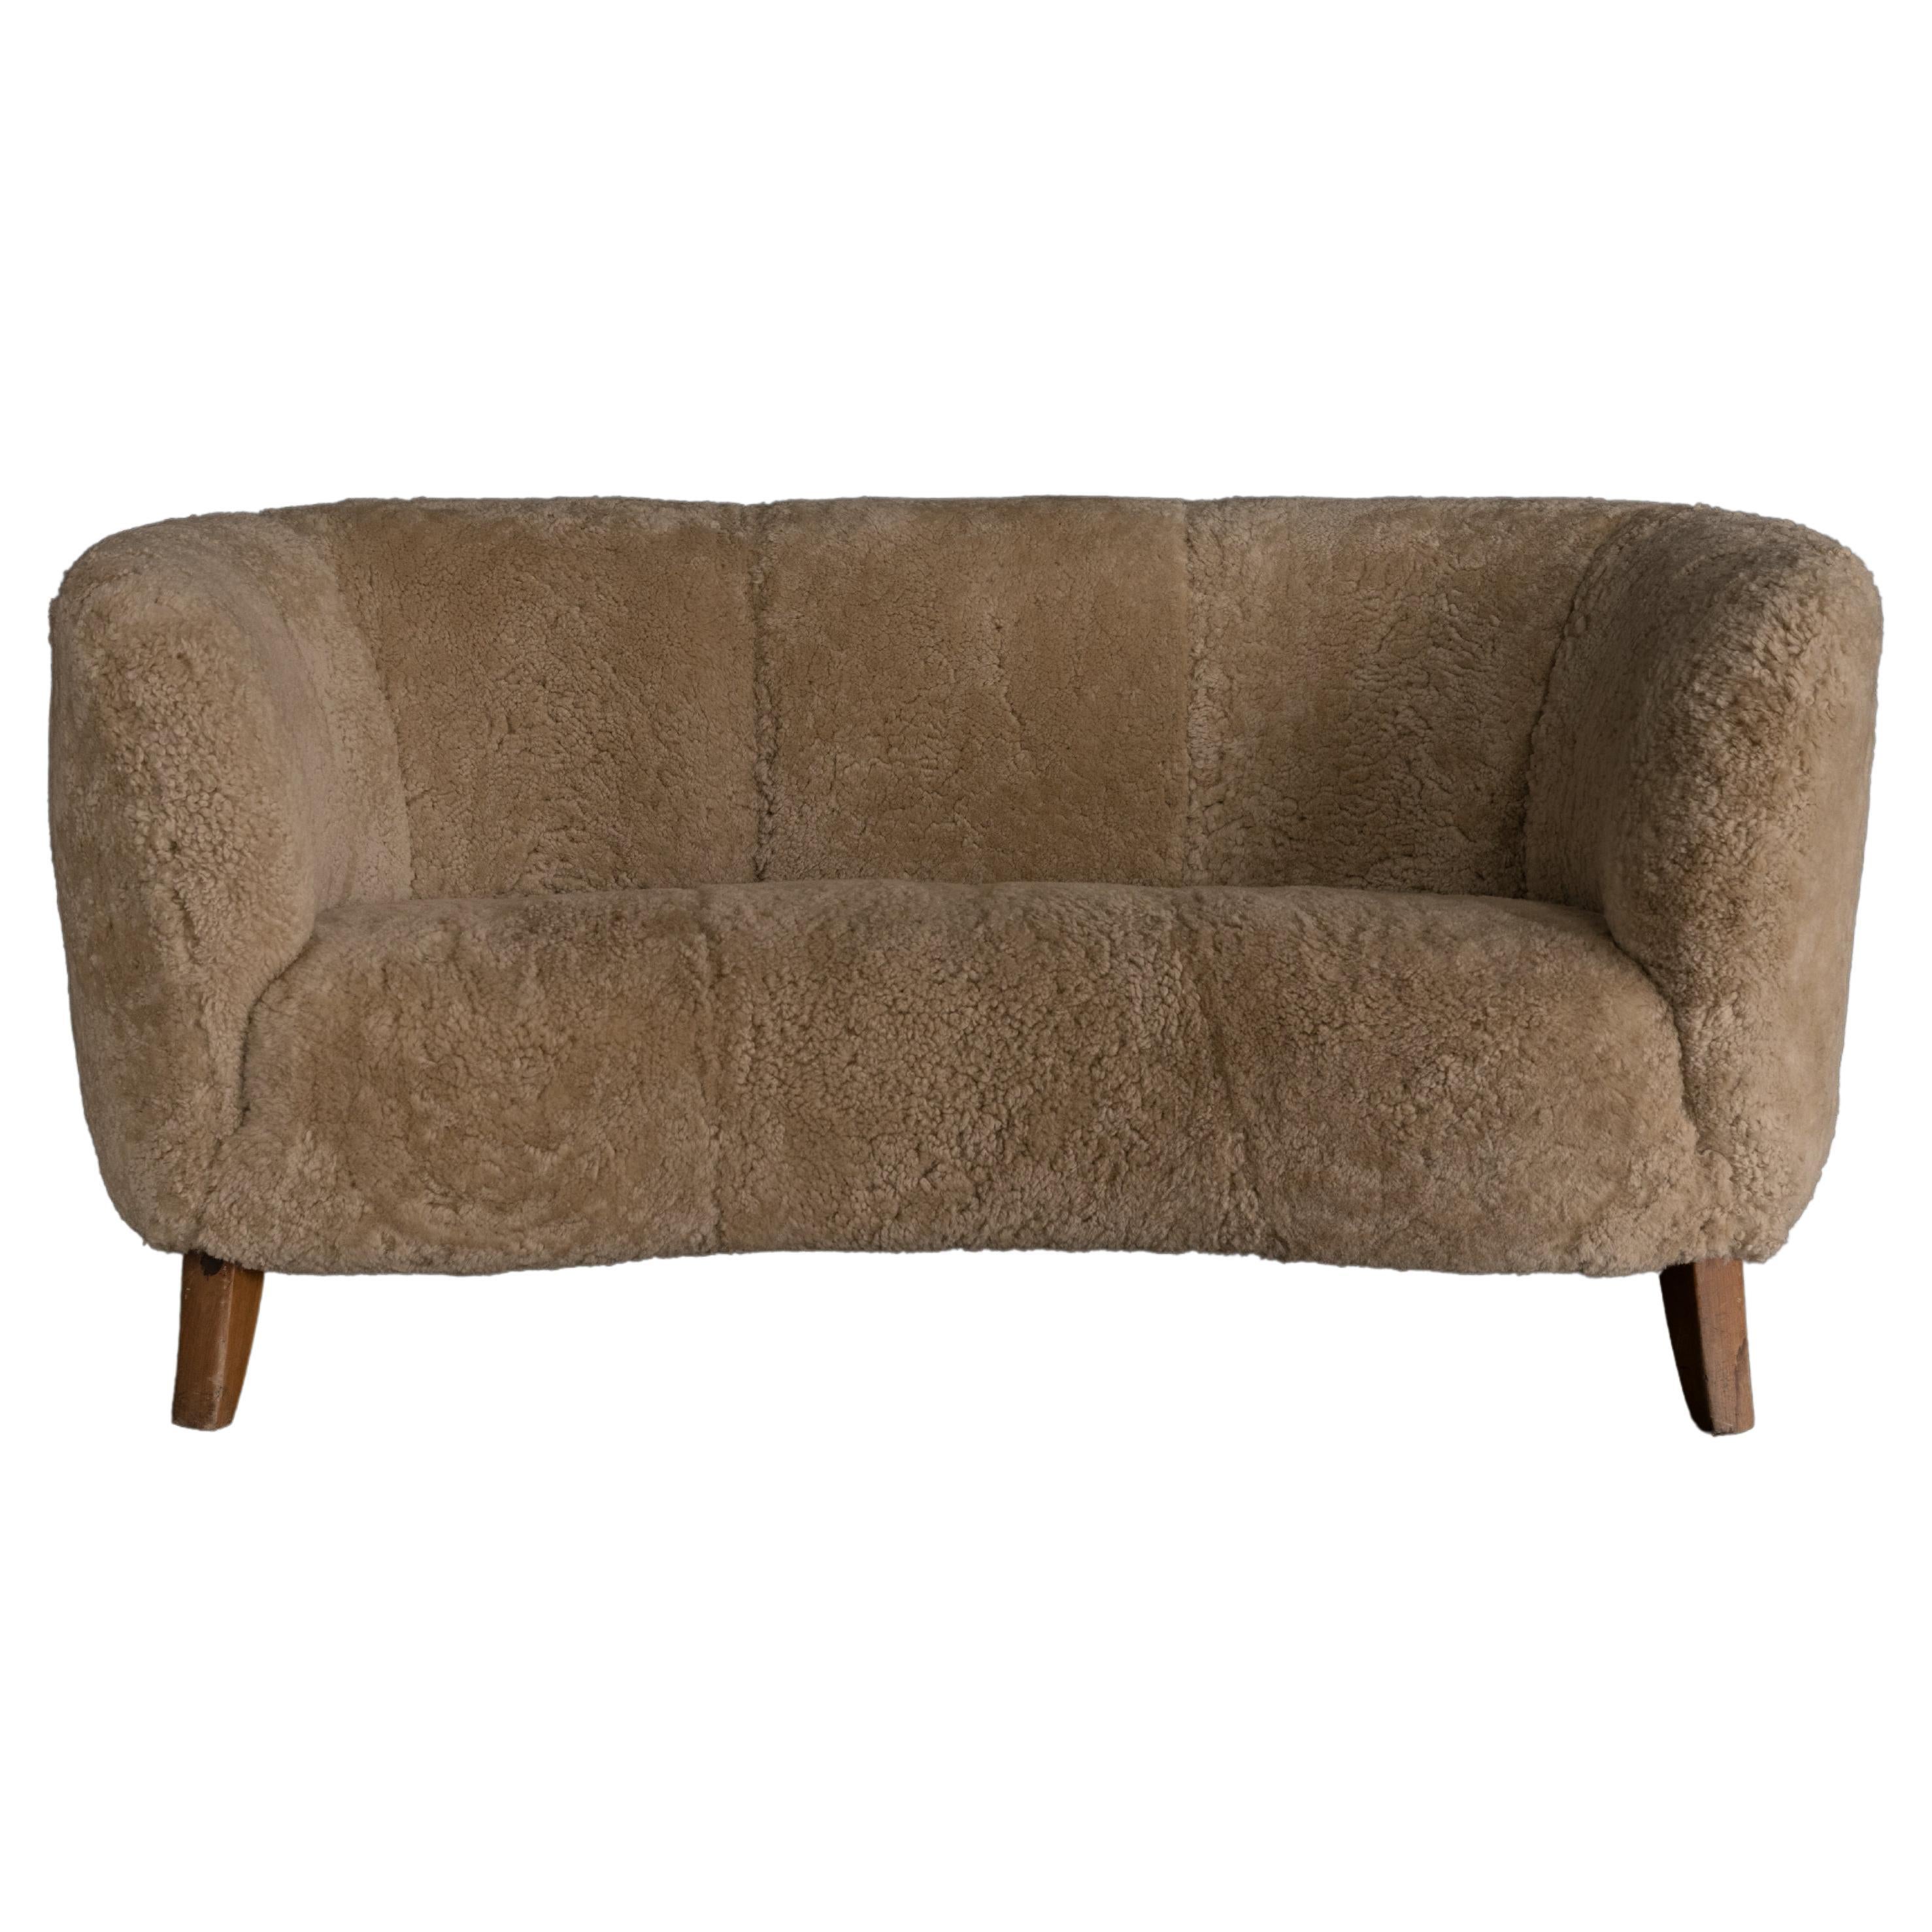 Curved Sheepskin Sofa For Sale